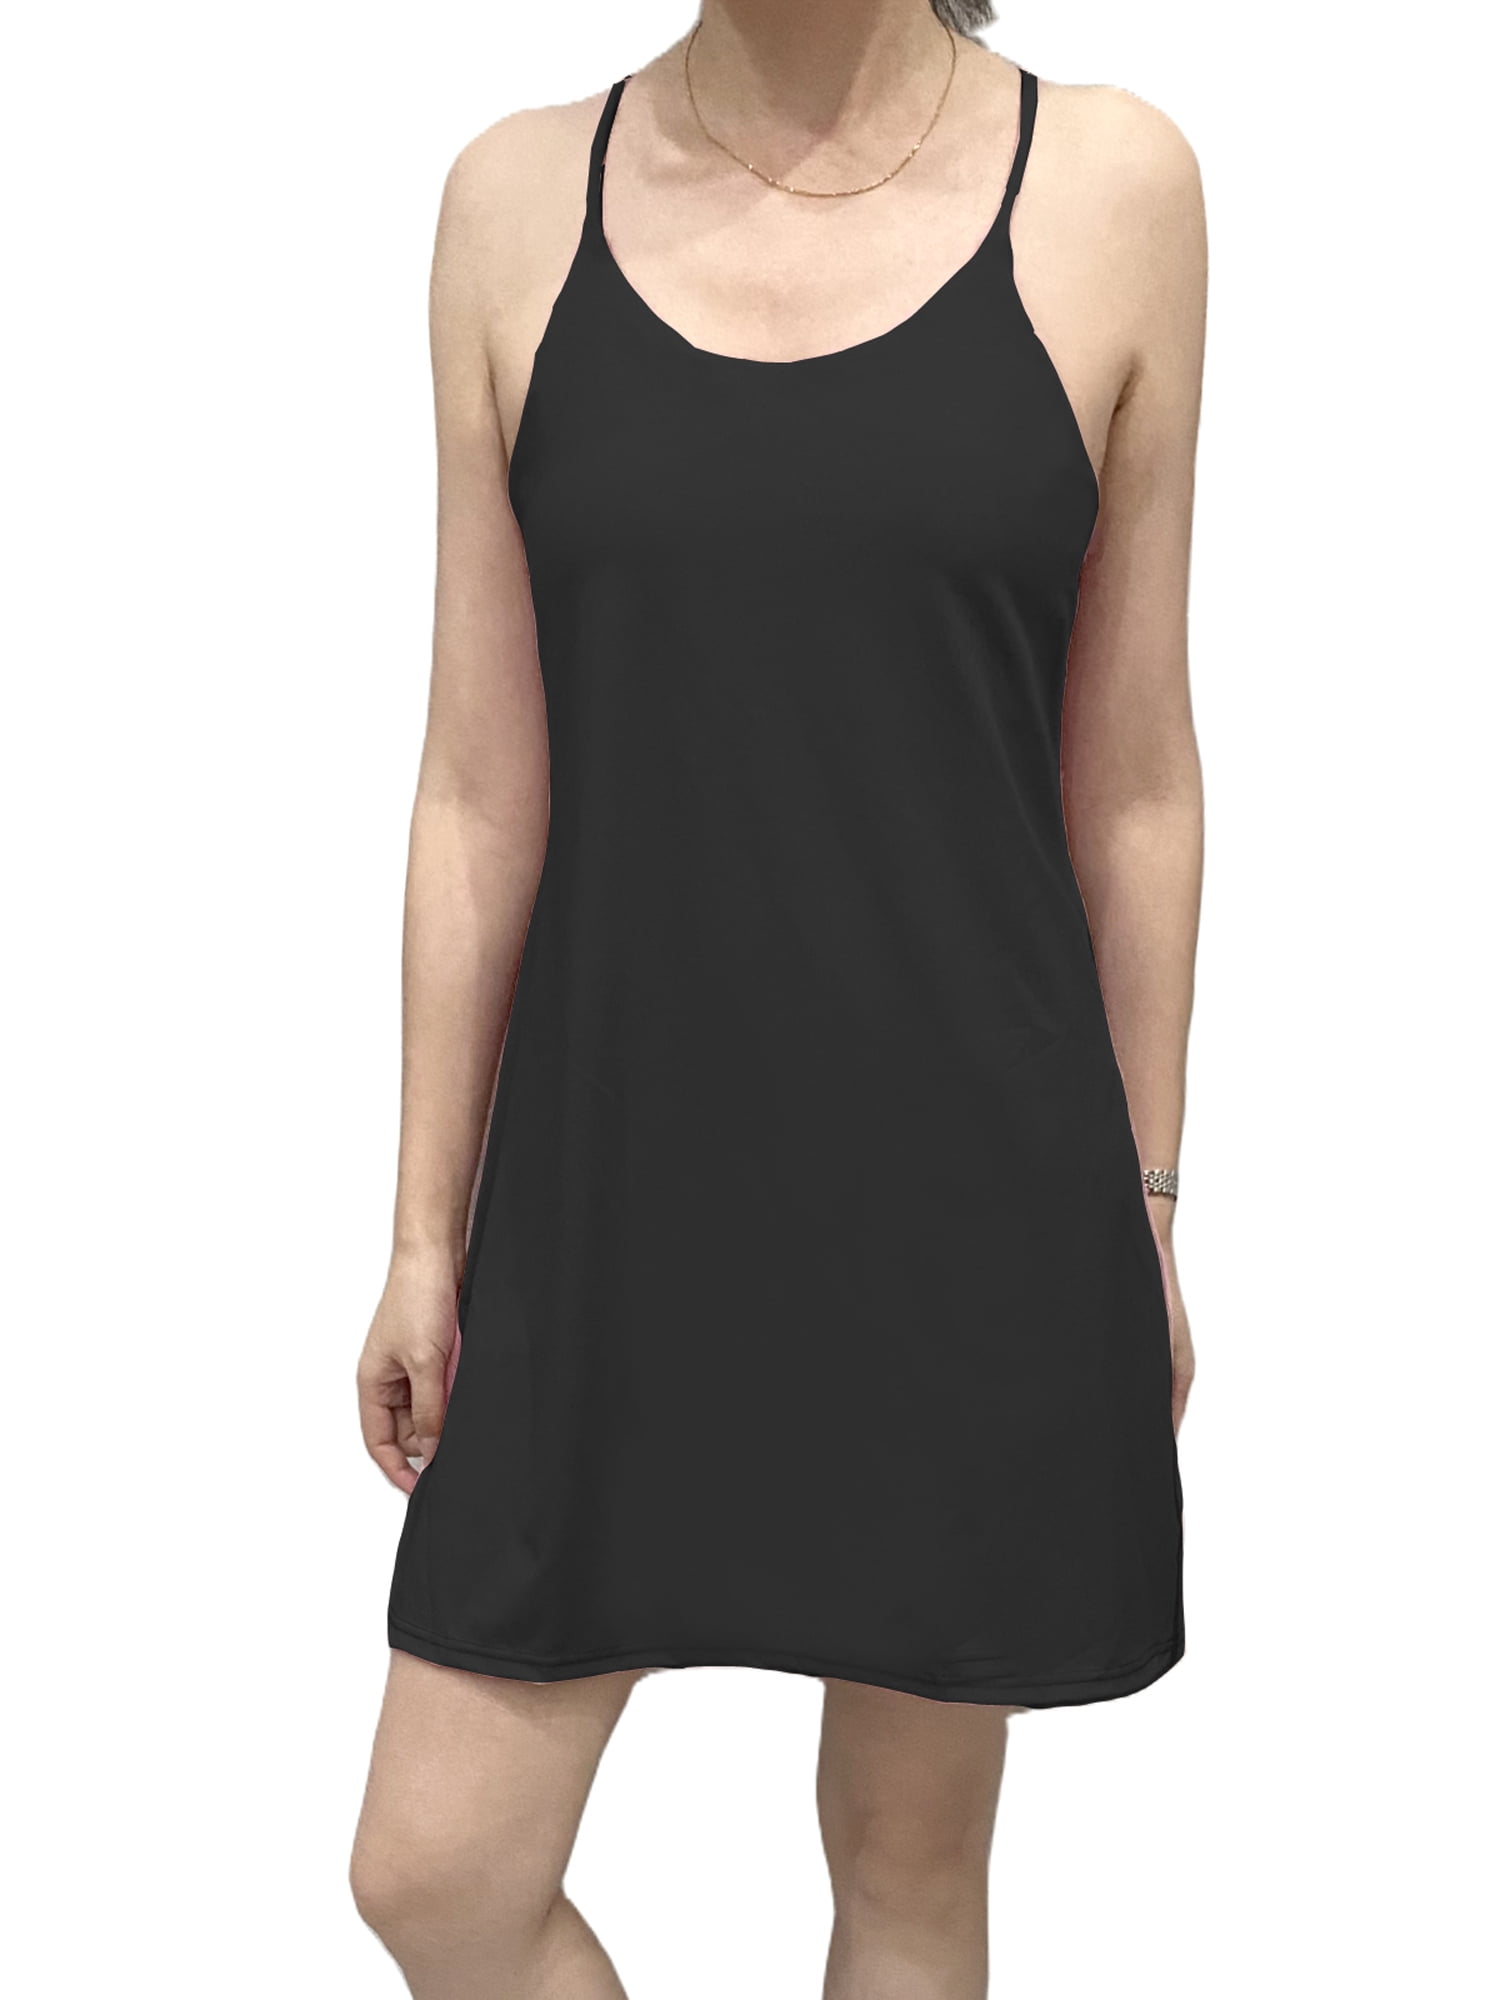 Women's Workout Sports Dress False 2Pcs Spaghetti Strap Dress with Built-in  Bra + Shorts with Pocket Mini Dress